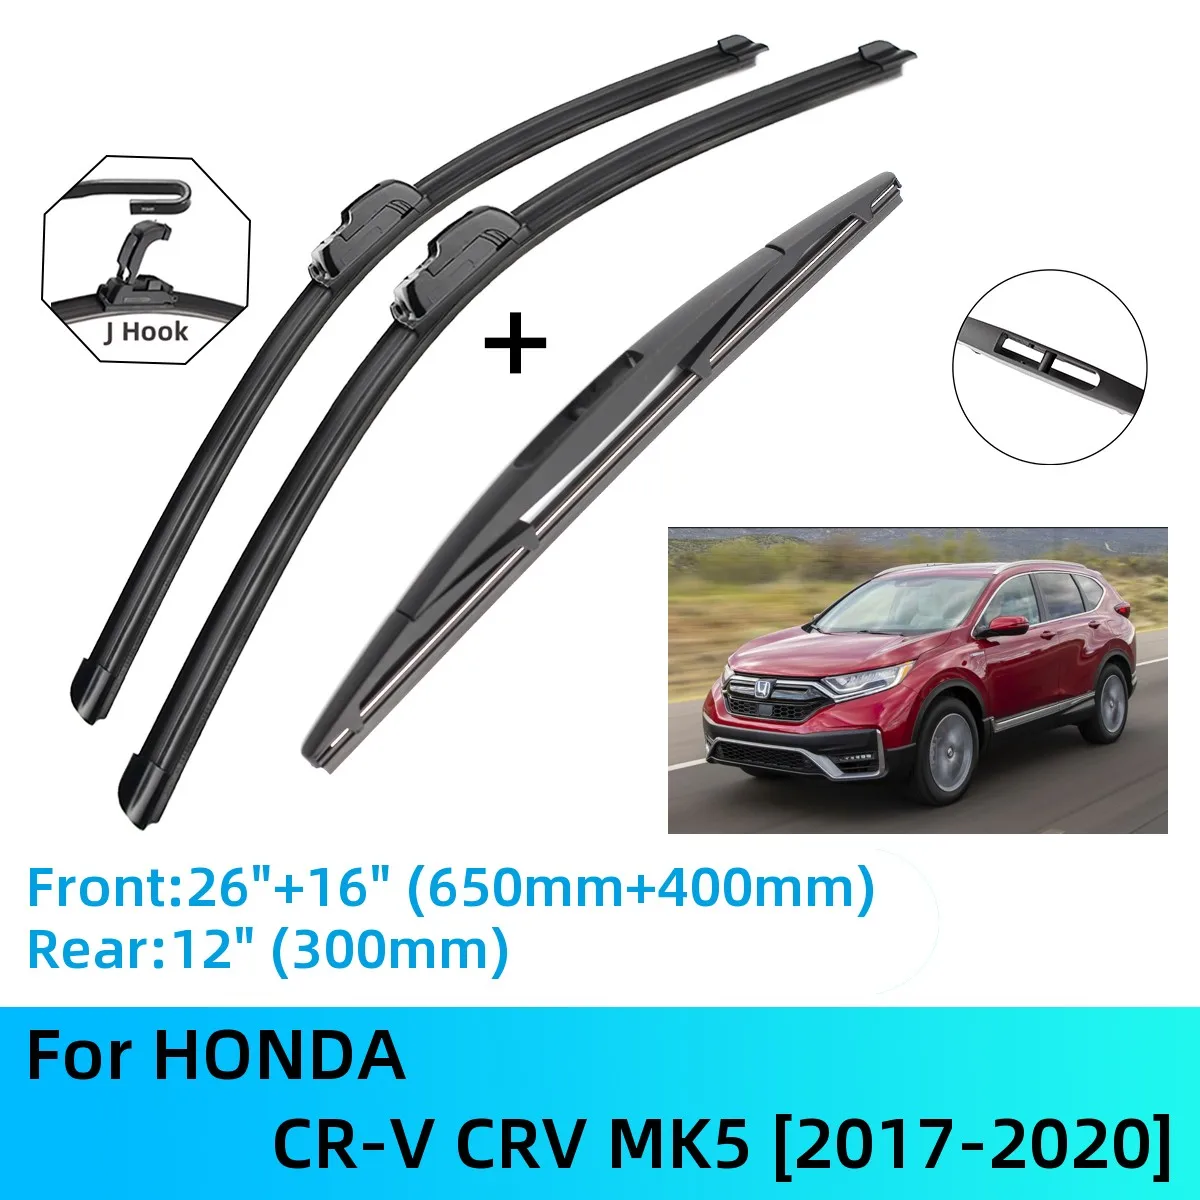 For HONDA CR-V CRV MK5 Front Rear Wiper Blades Brushes Cutter Accessories J U Hook 2017-2020 2017 2018 2019 2020